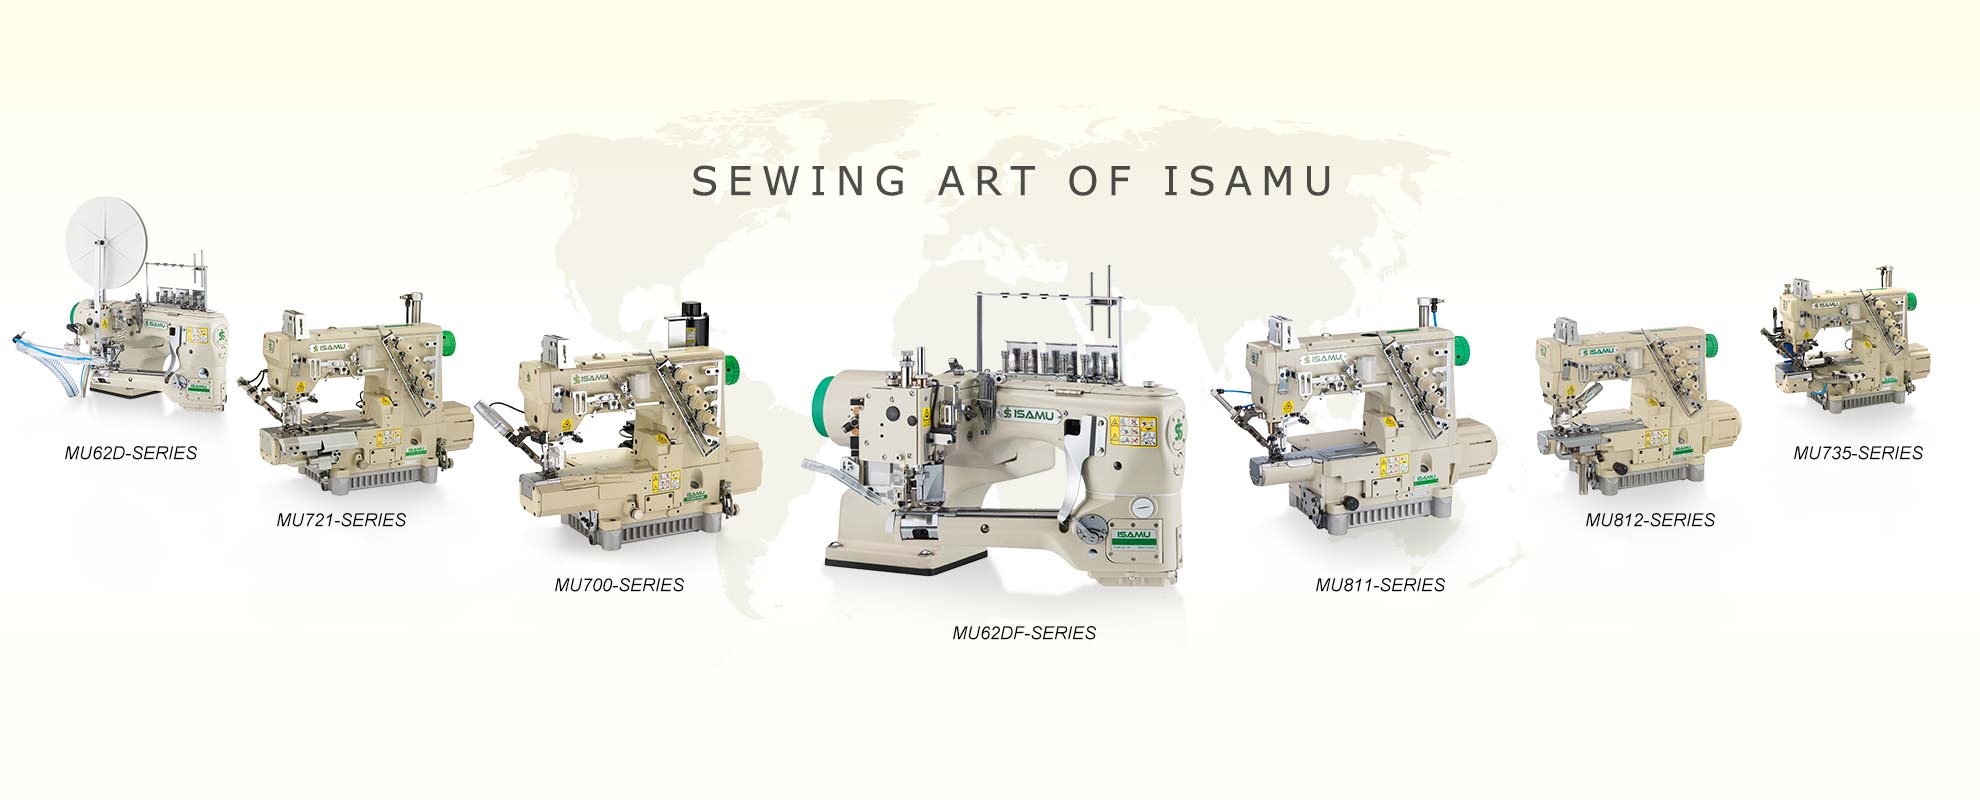 sewing art of isamu